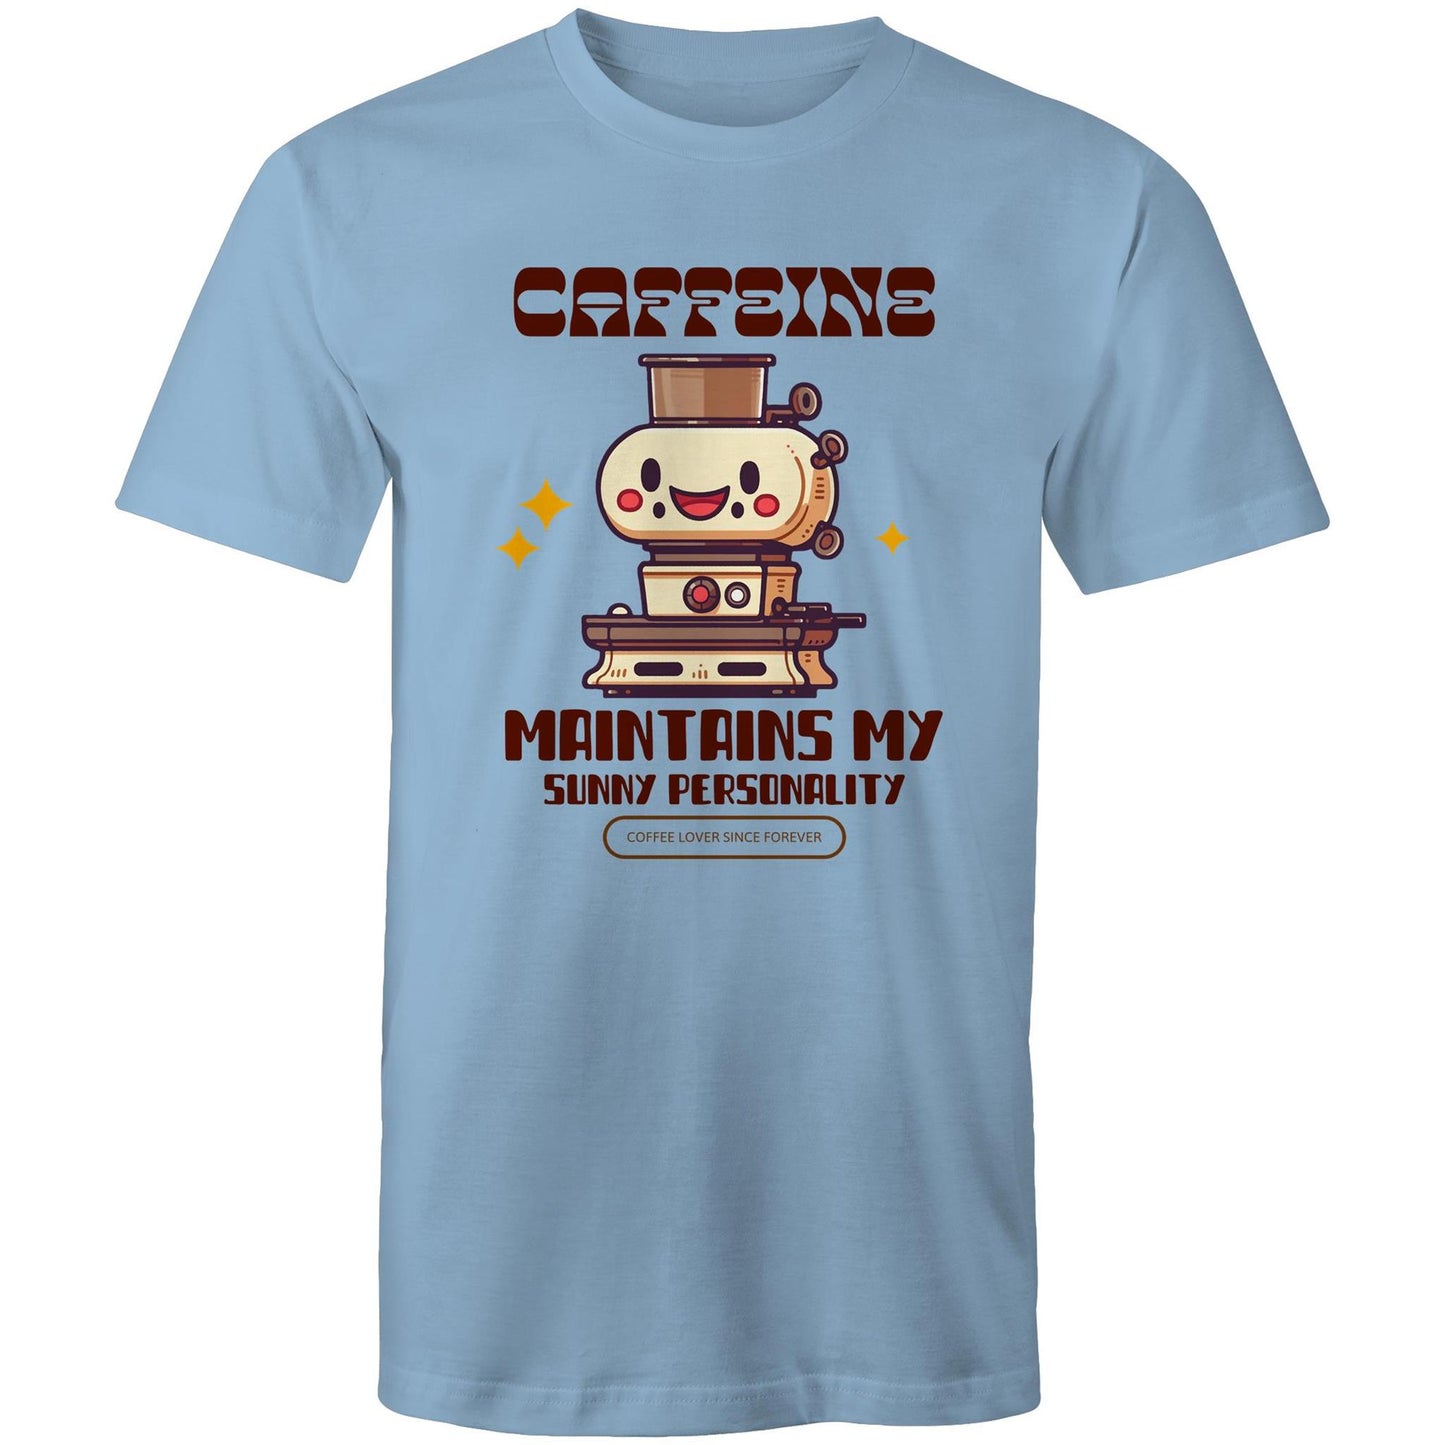 Caffeine Maintains My Sunny Personality - Mens T-Shirt Carolina Blue Mens T-shirt Coffee